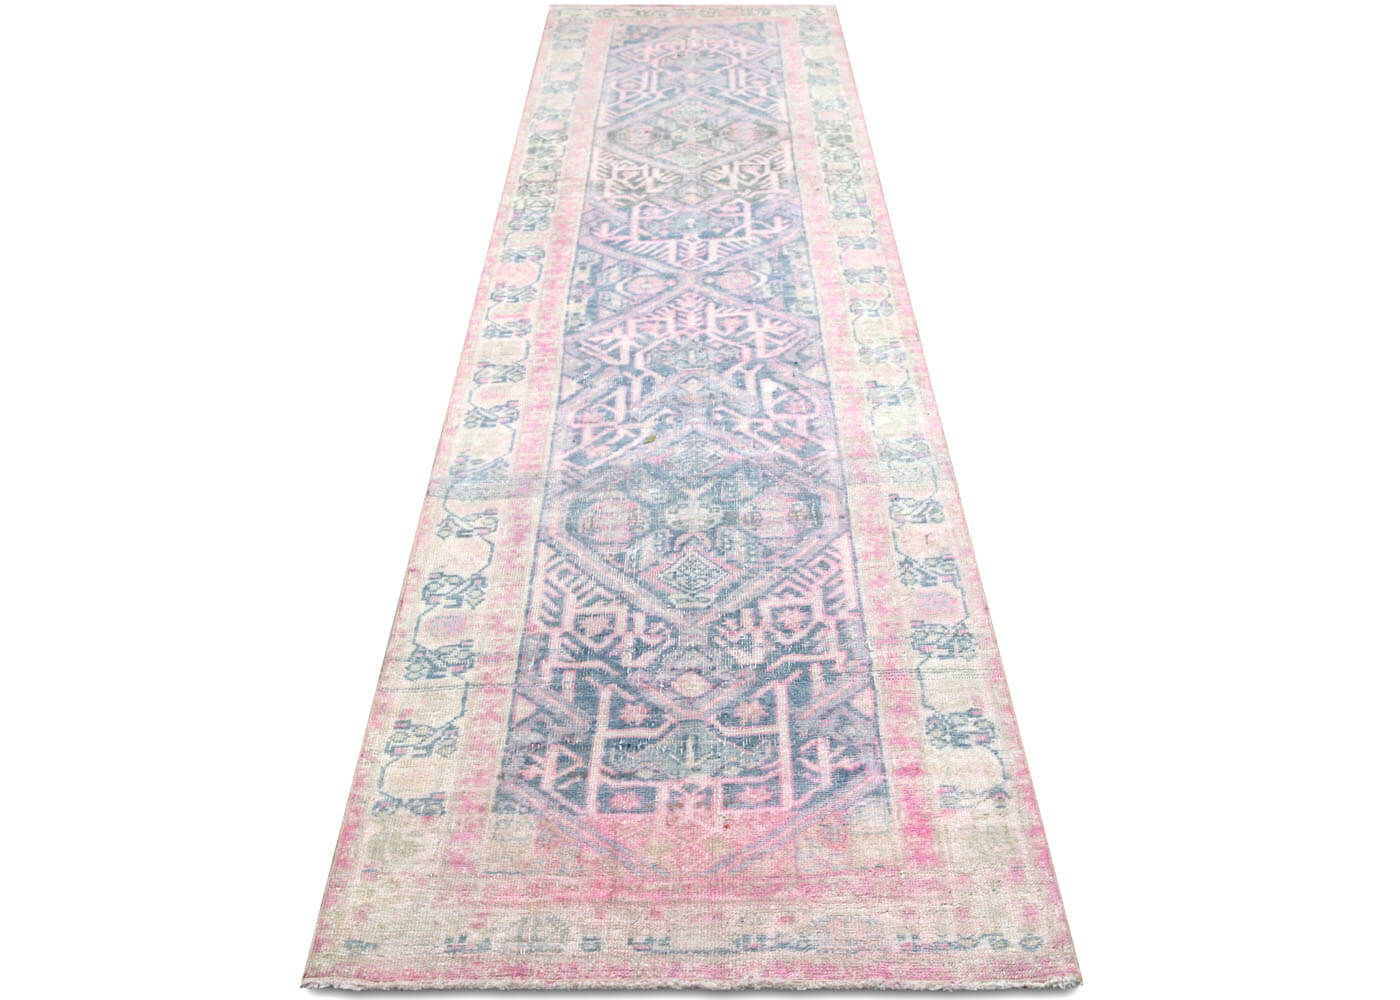 Semi Antique Persian Melayer Runner - 2'11" x 11'9"